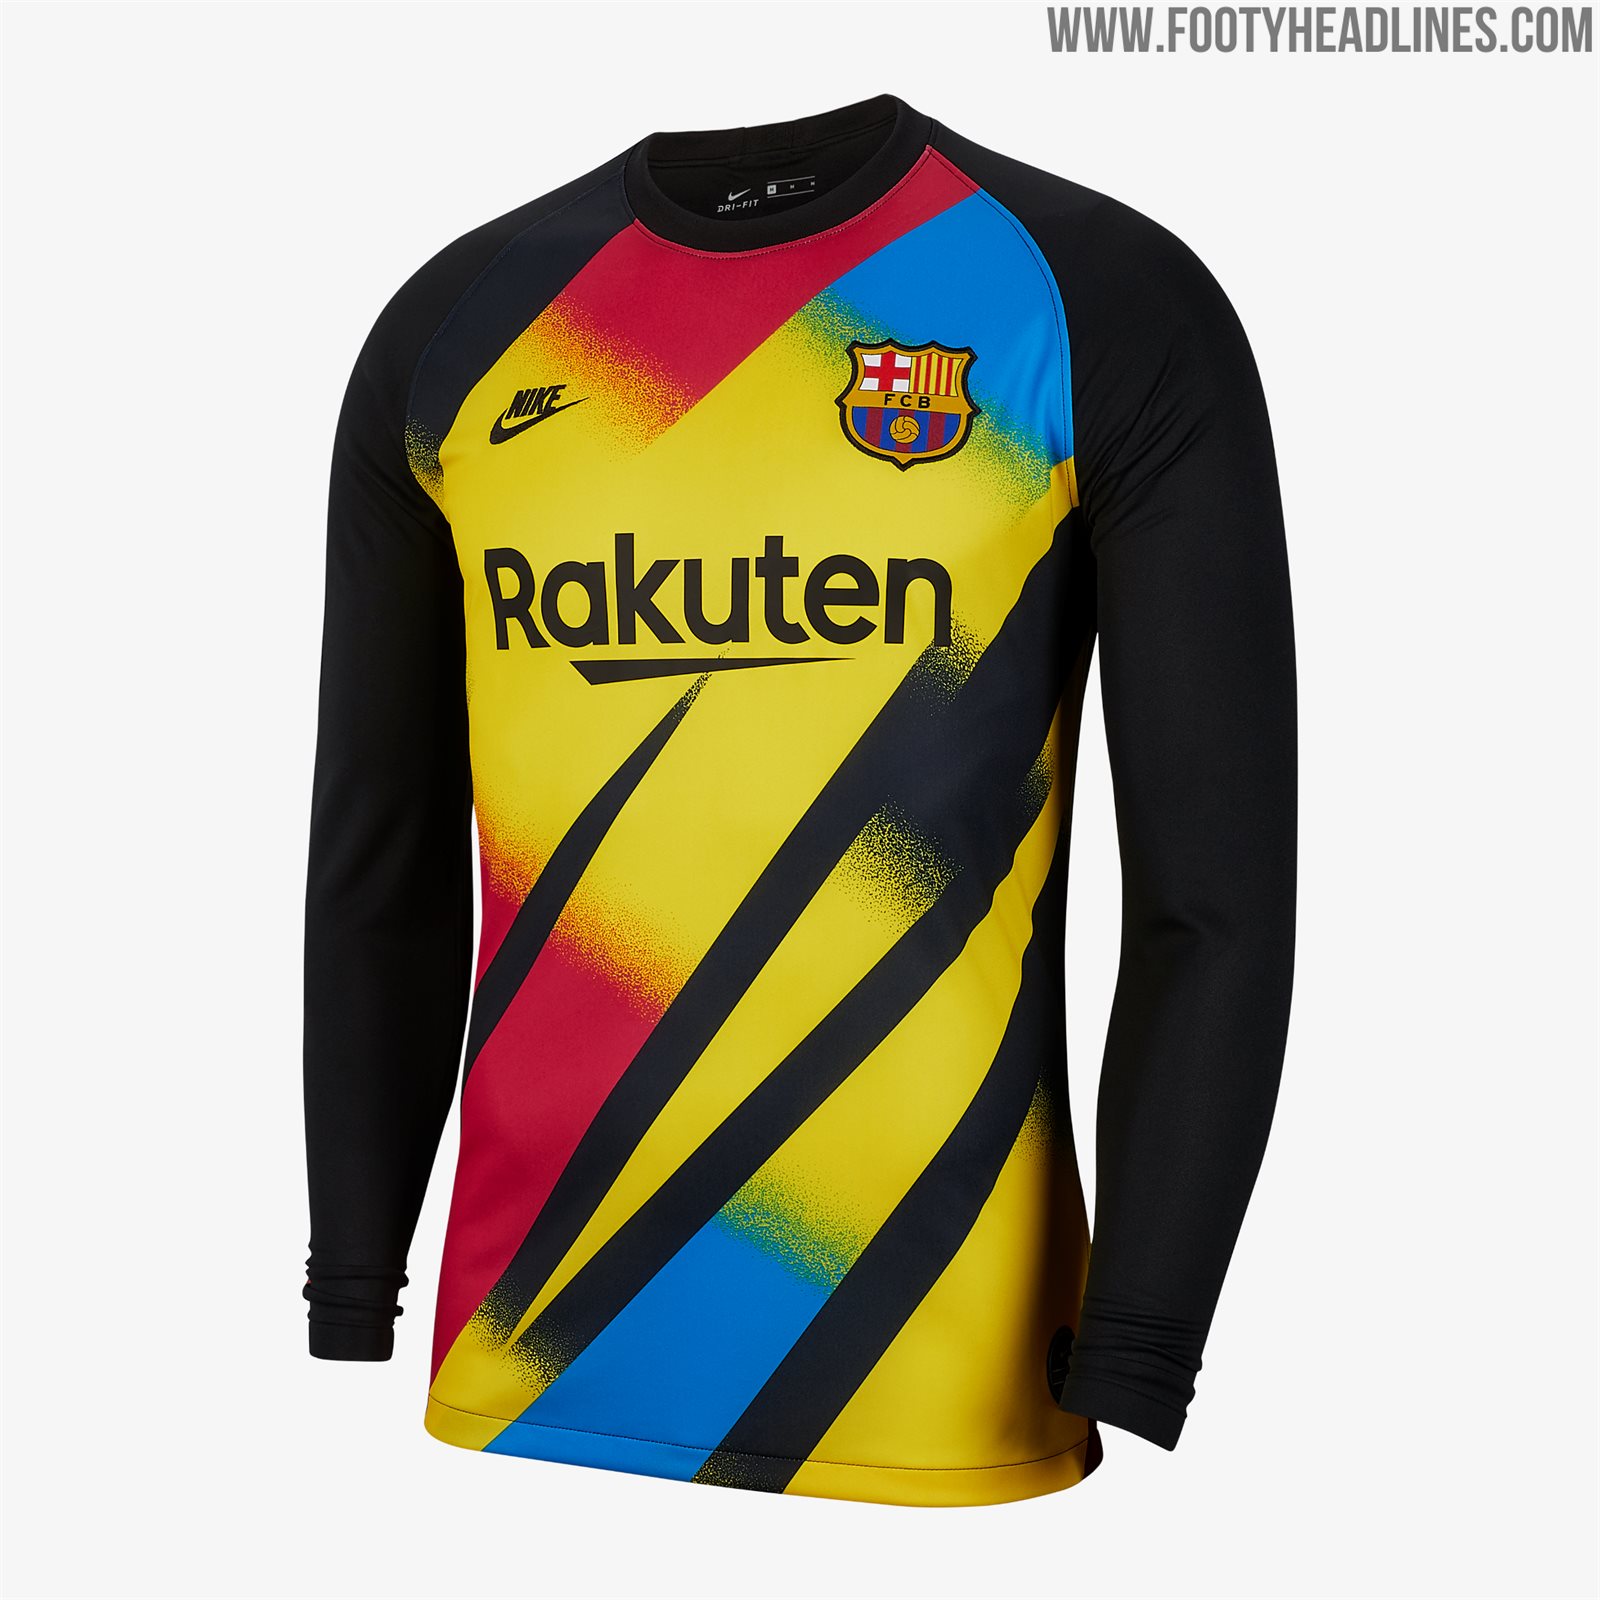 Crazy Nike FC Barcelona 19-20 Champions League Goalkeeper Kit Released ...